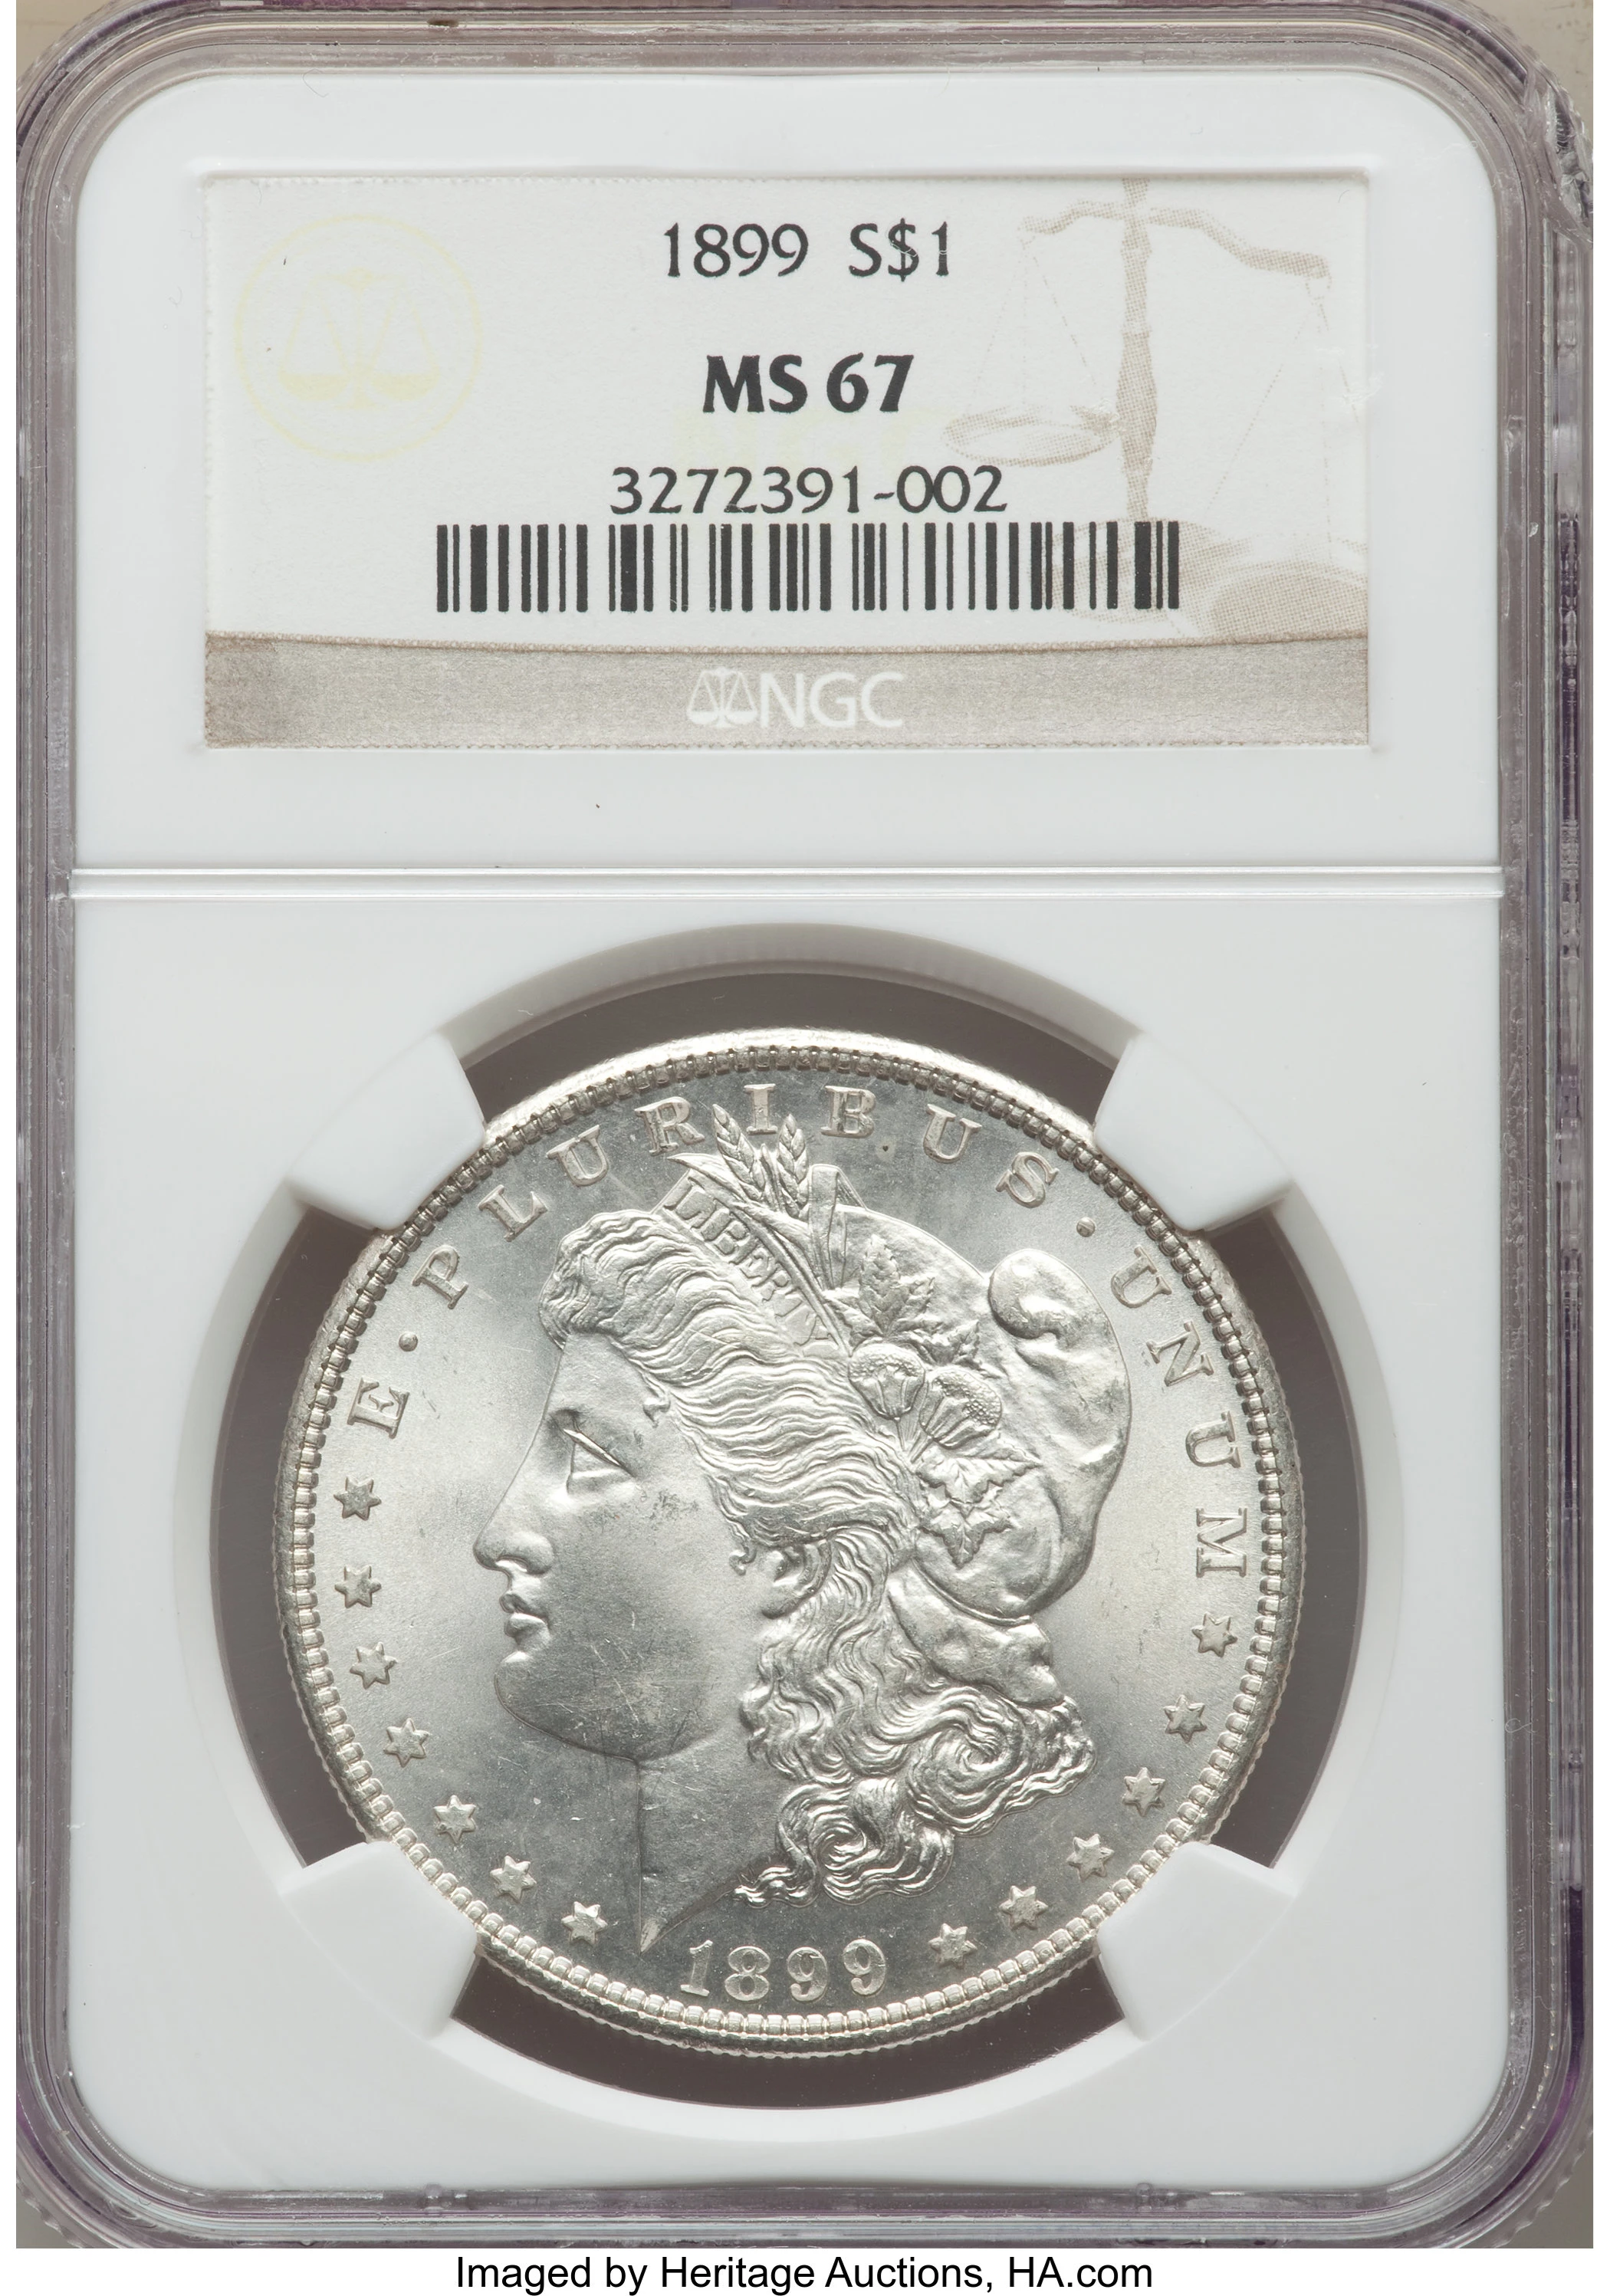 Sold at Auction: 1892-1899 Morgan Silver Dollar Coin Book Set 25 Coins